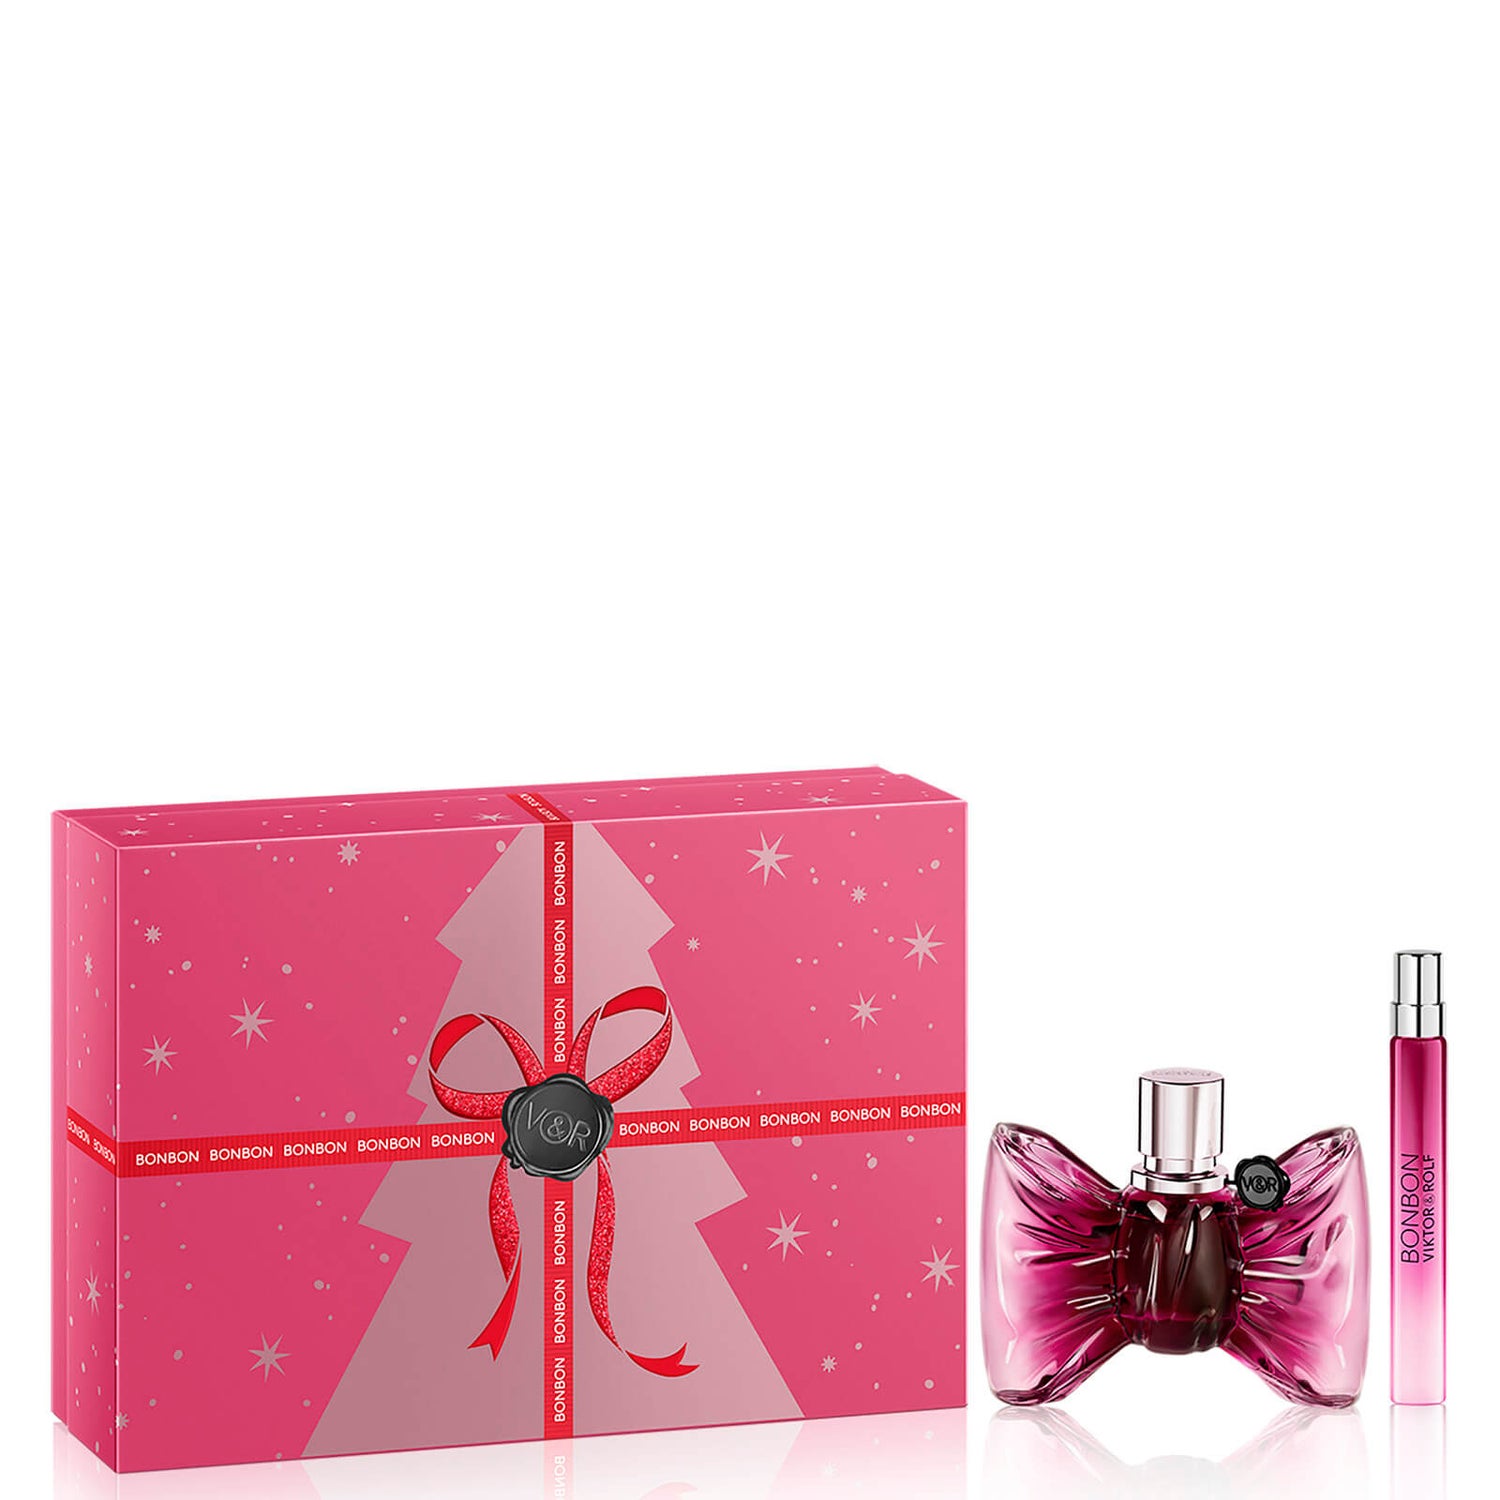 Viktor and Rolf Bon Bon Eau de Parfum Gift Set 50ml (Worth £94.00)